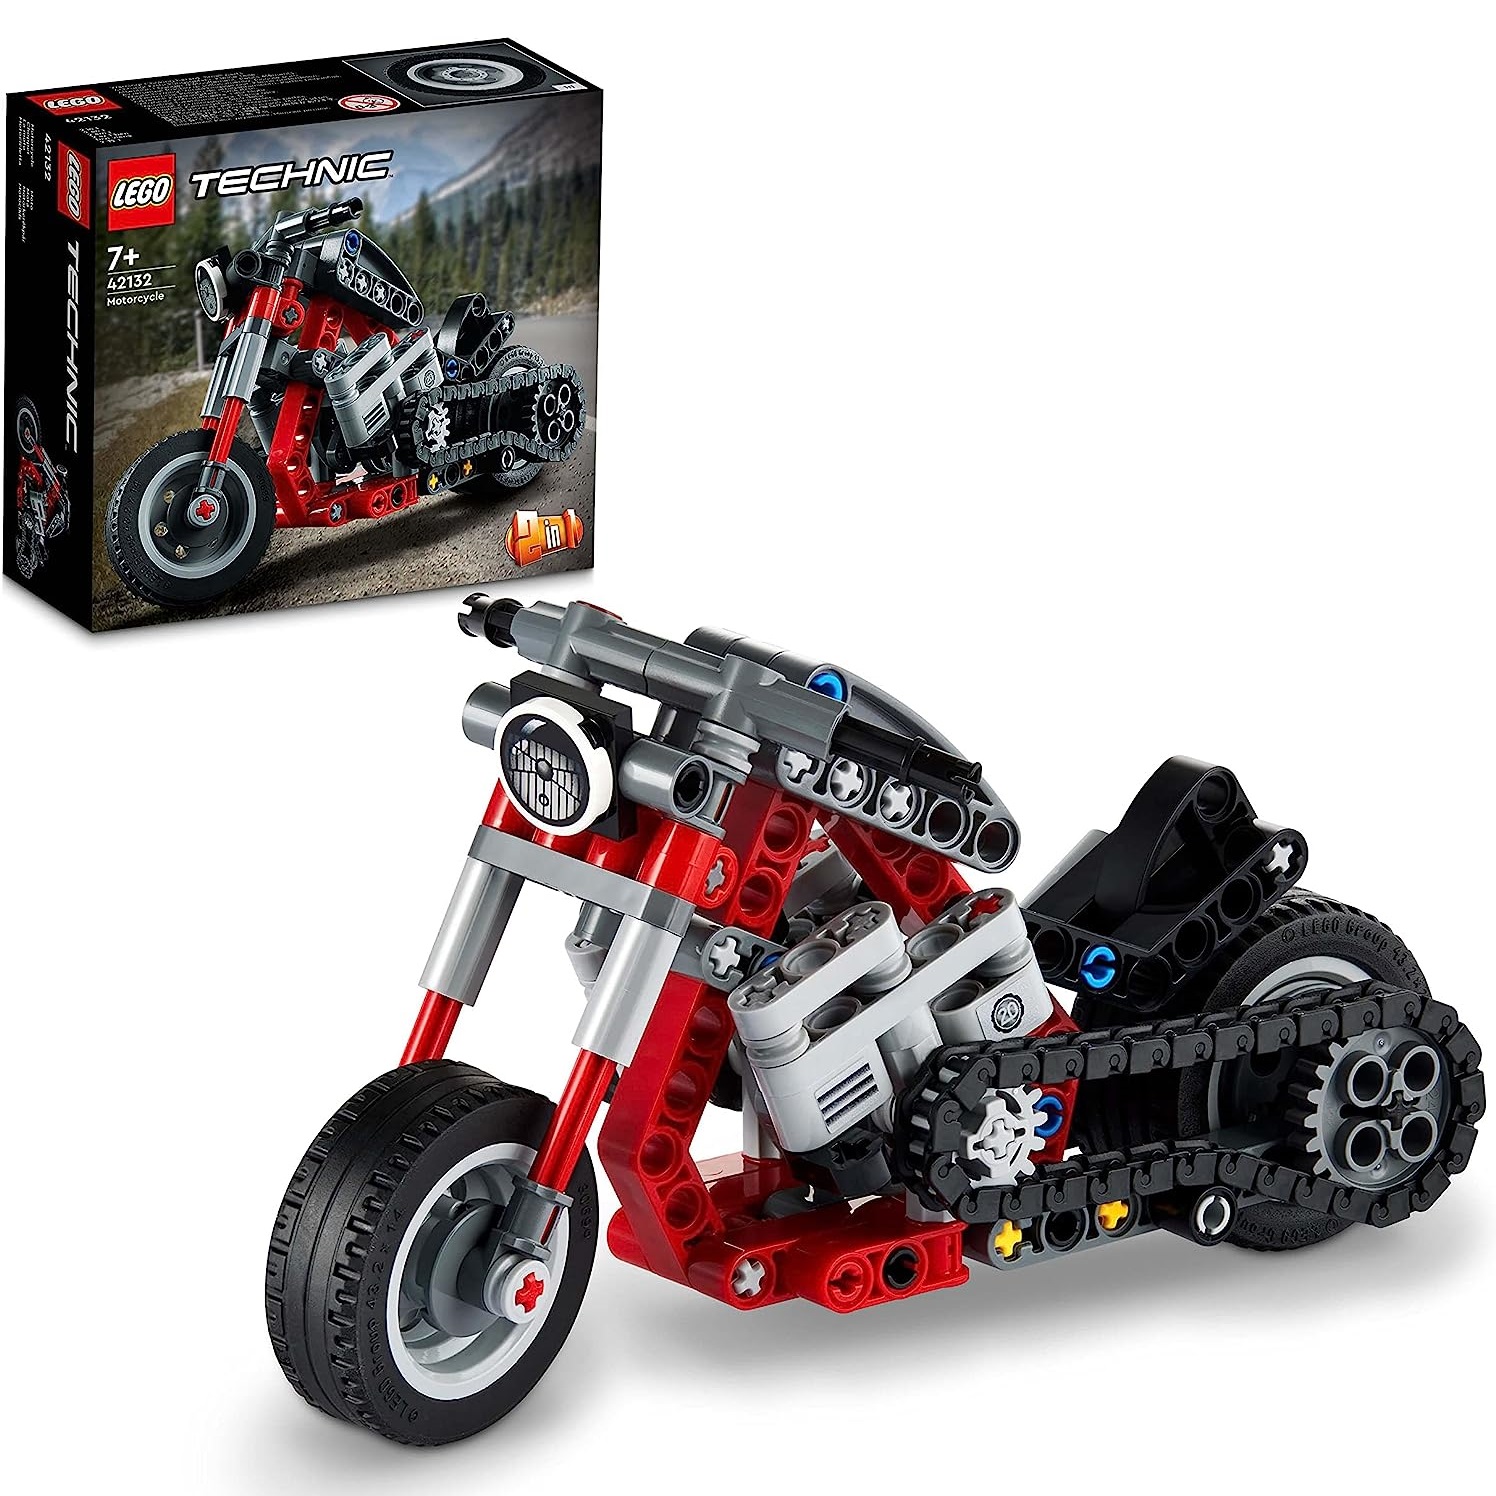 LEGO Technic 42132 - 